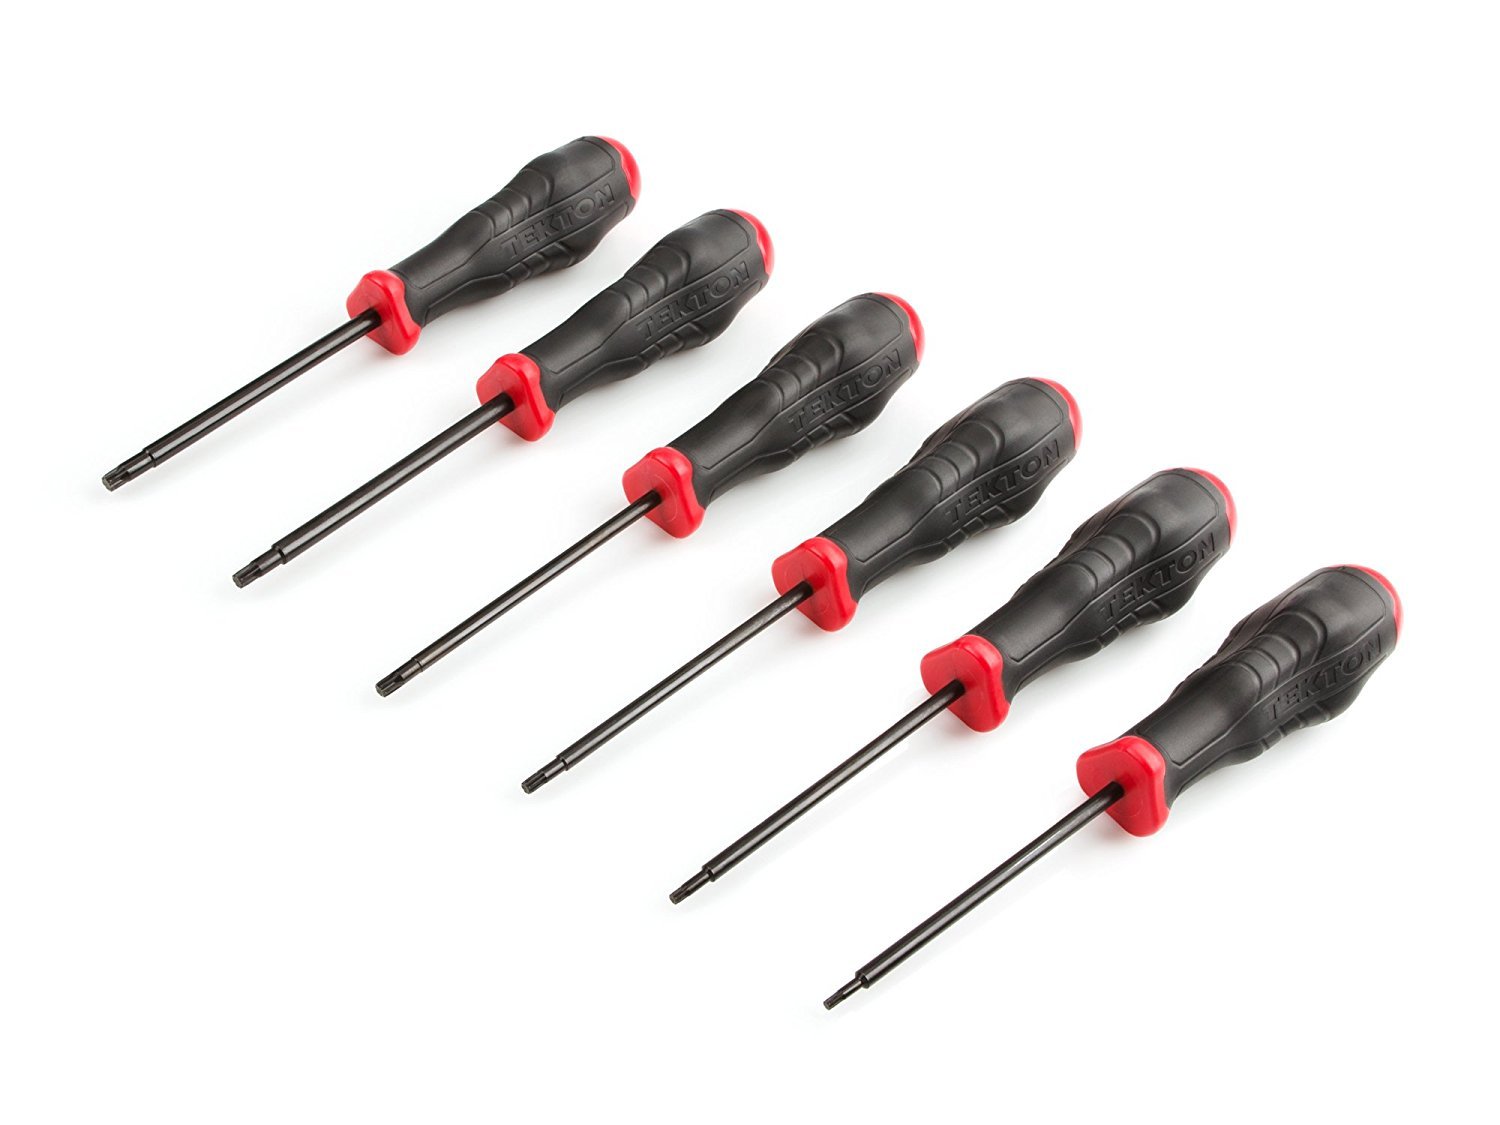 Small torx screwdriver set